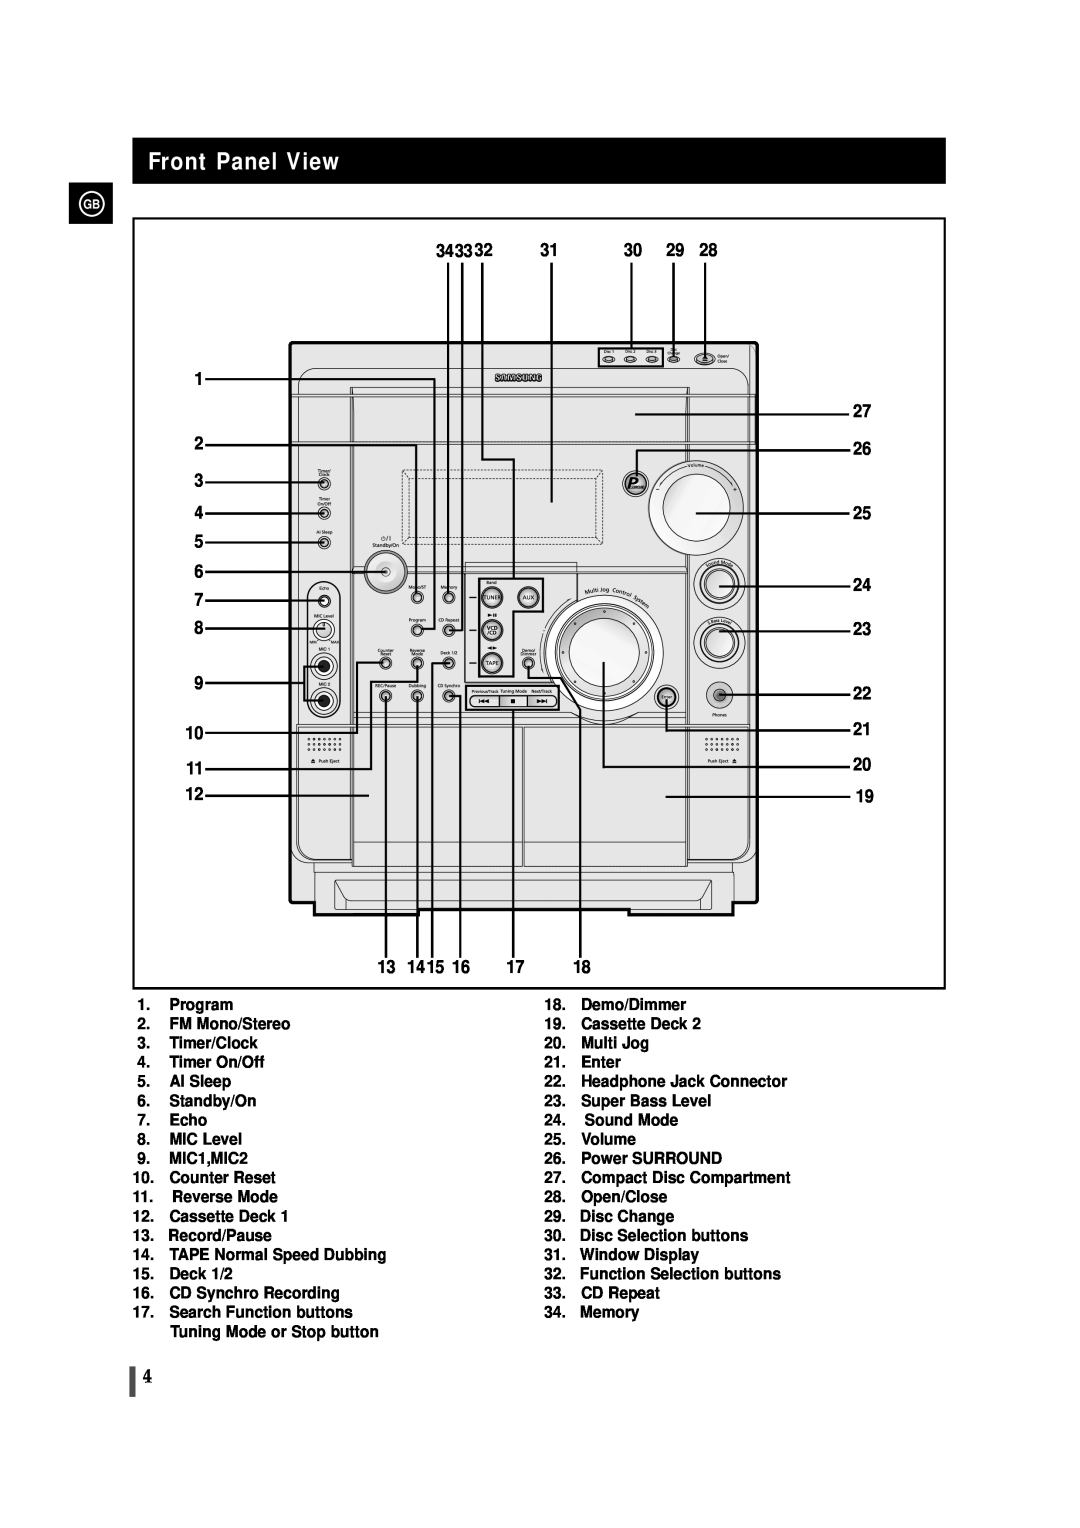 Samsung MAX-VS720 instruction manual Front Panel View, 3433, 1415 